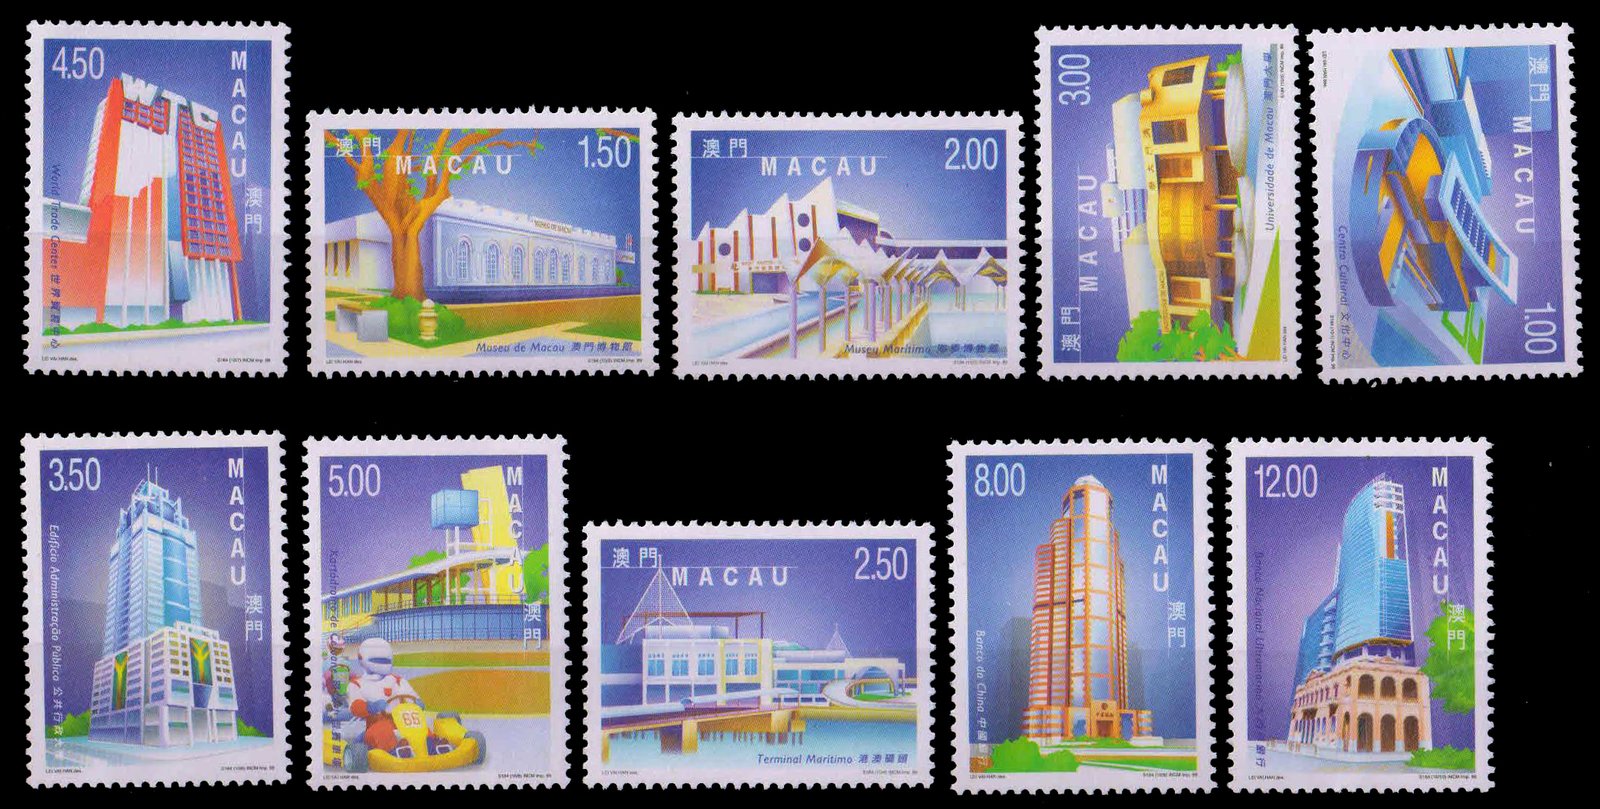 MACAU 1999-Modern Buildings, Museum, Ferry Terminal, University, Bank of China, Set of 10, MNH, S.G. 1107-1116-Cat � 25-